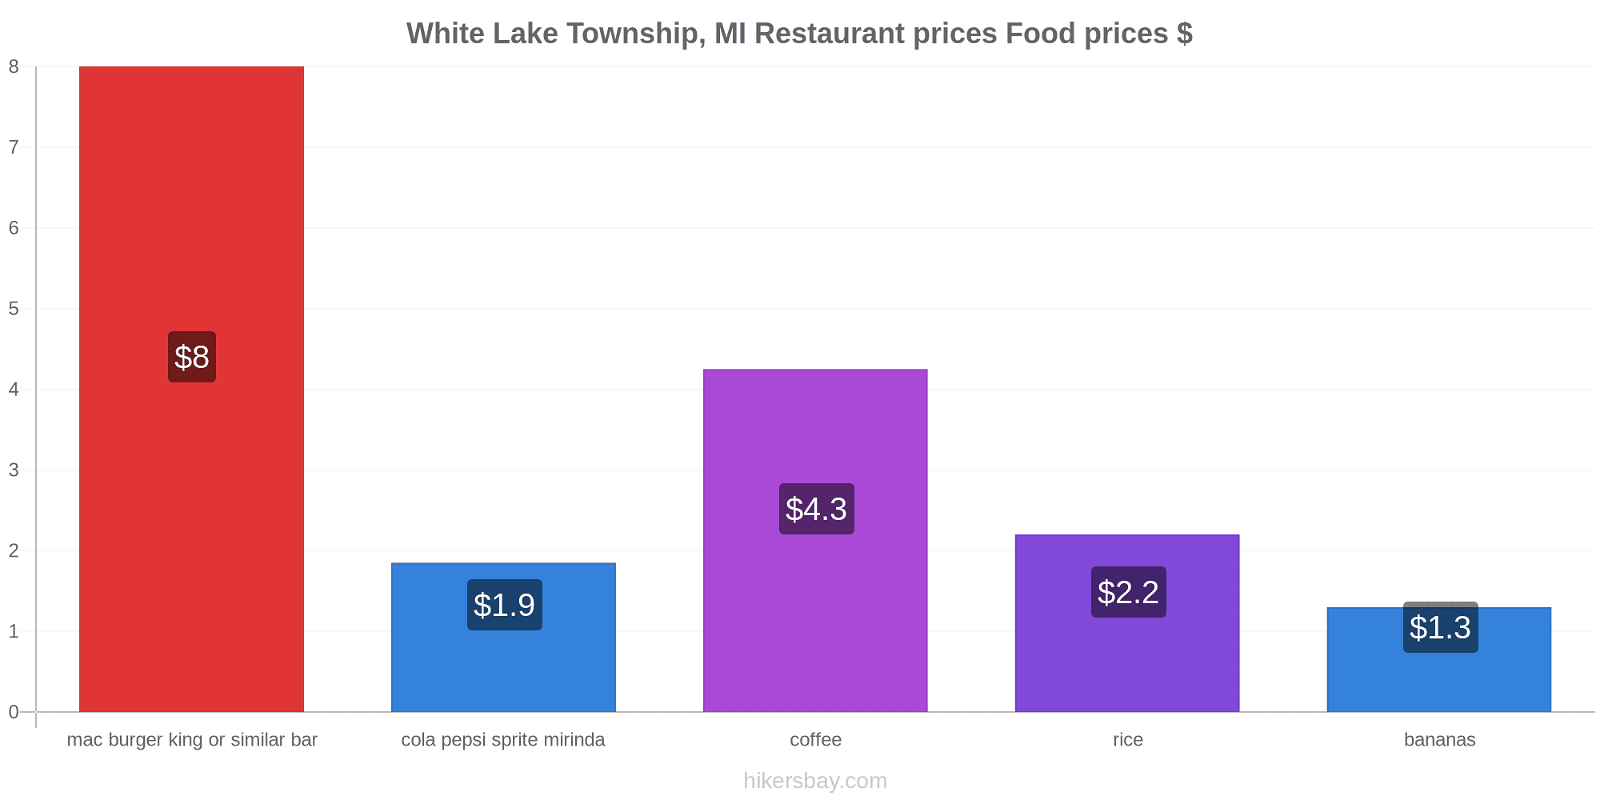 White Lake Township, MI price changes hikersbay.com